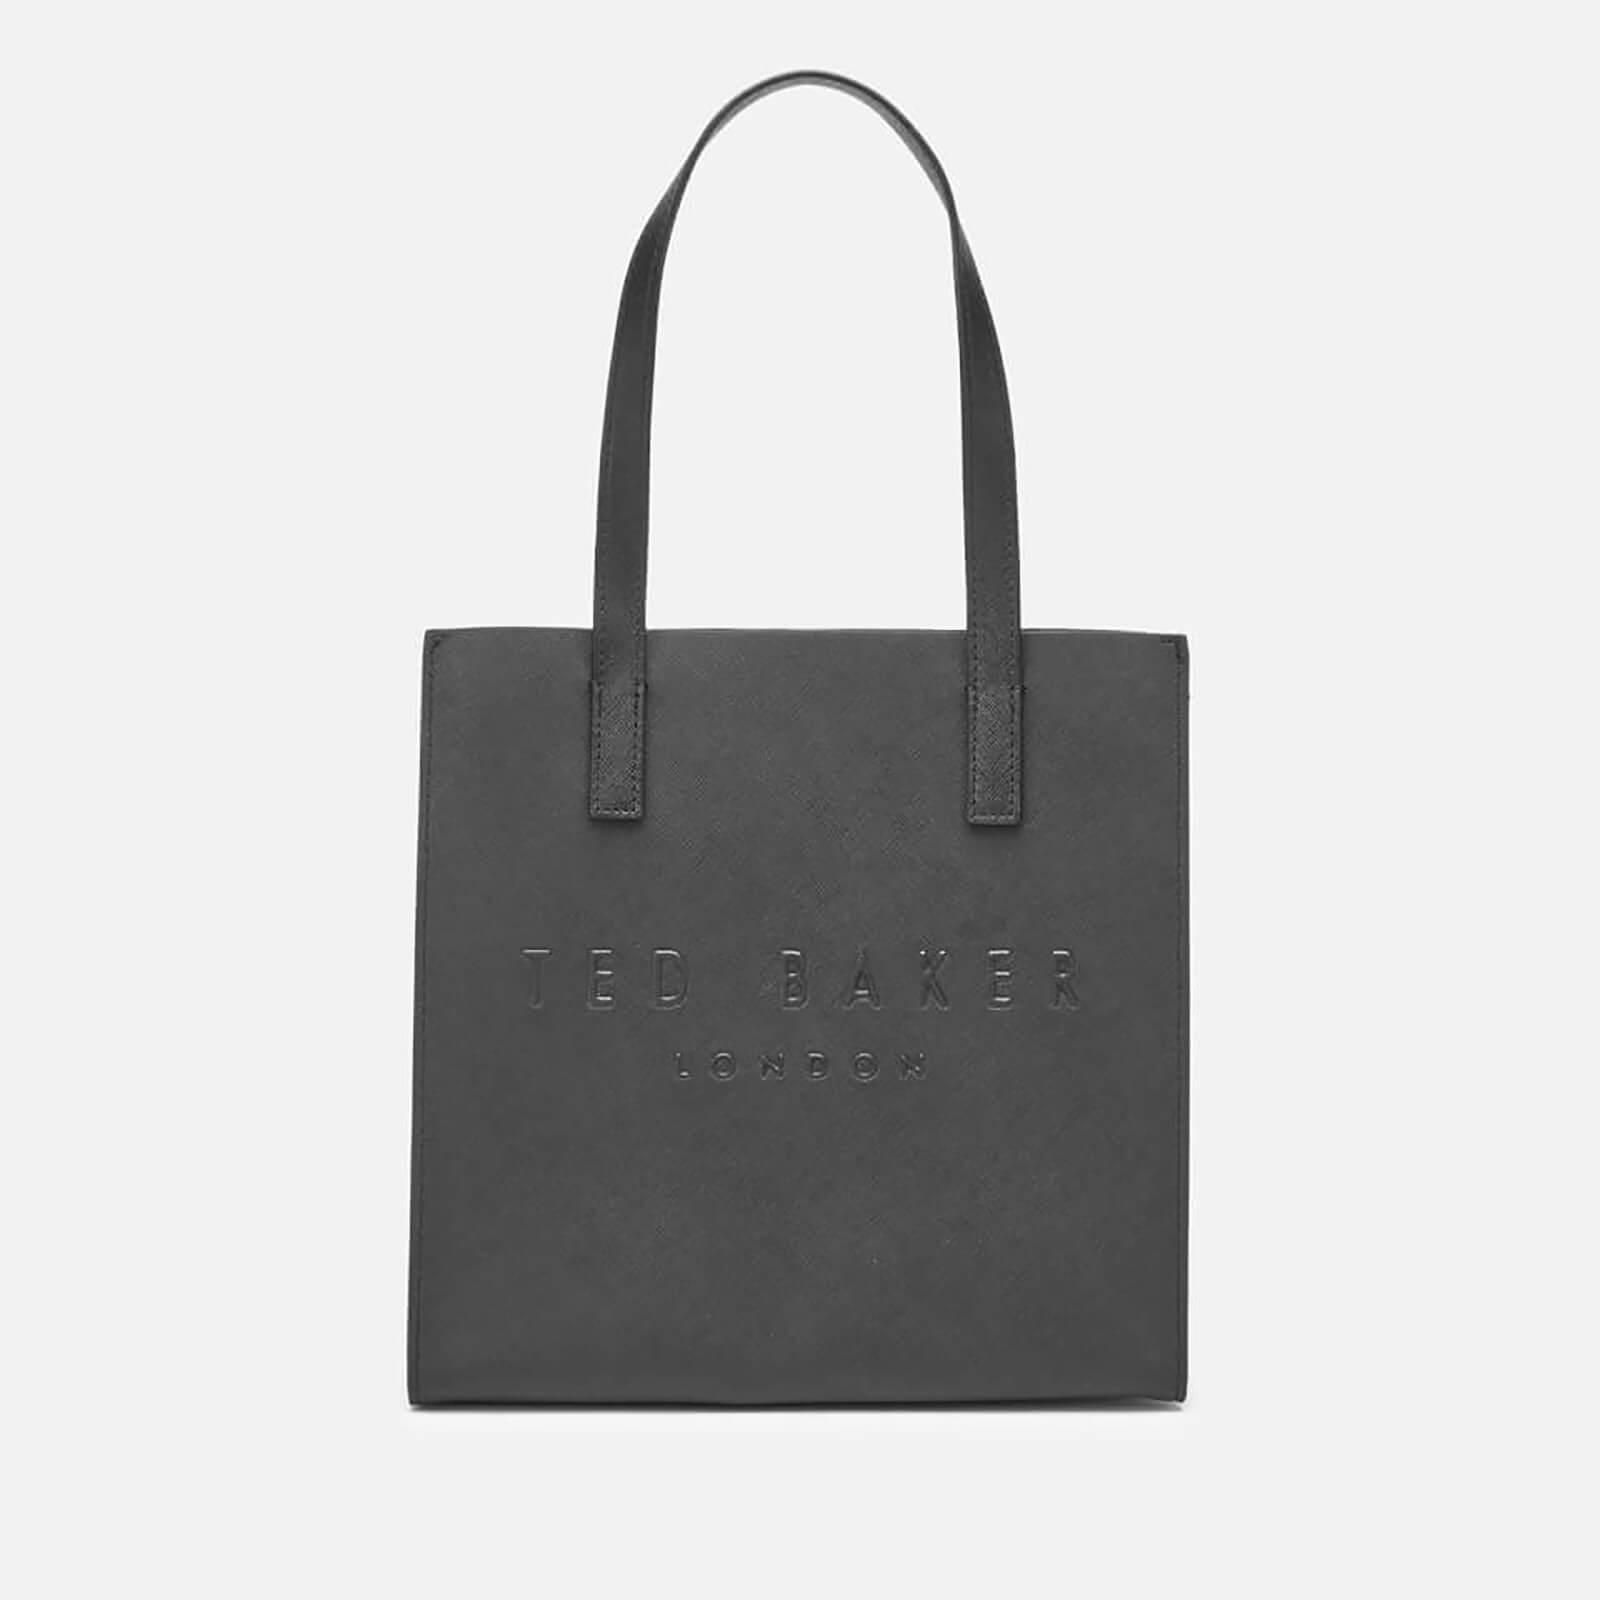 Ted Baker Small Black Bag Shop Buy, Save 50% | jlcatj.gob.mx